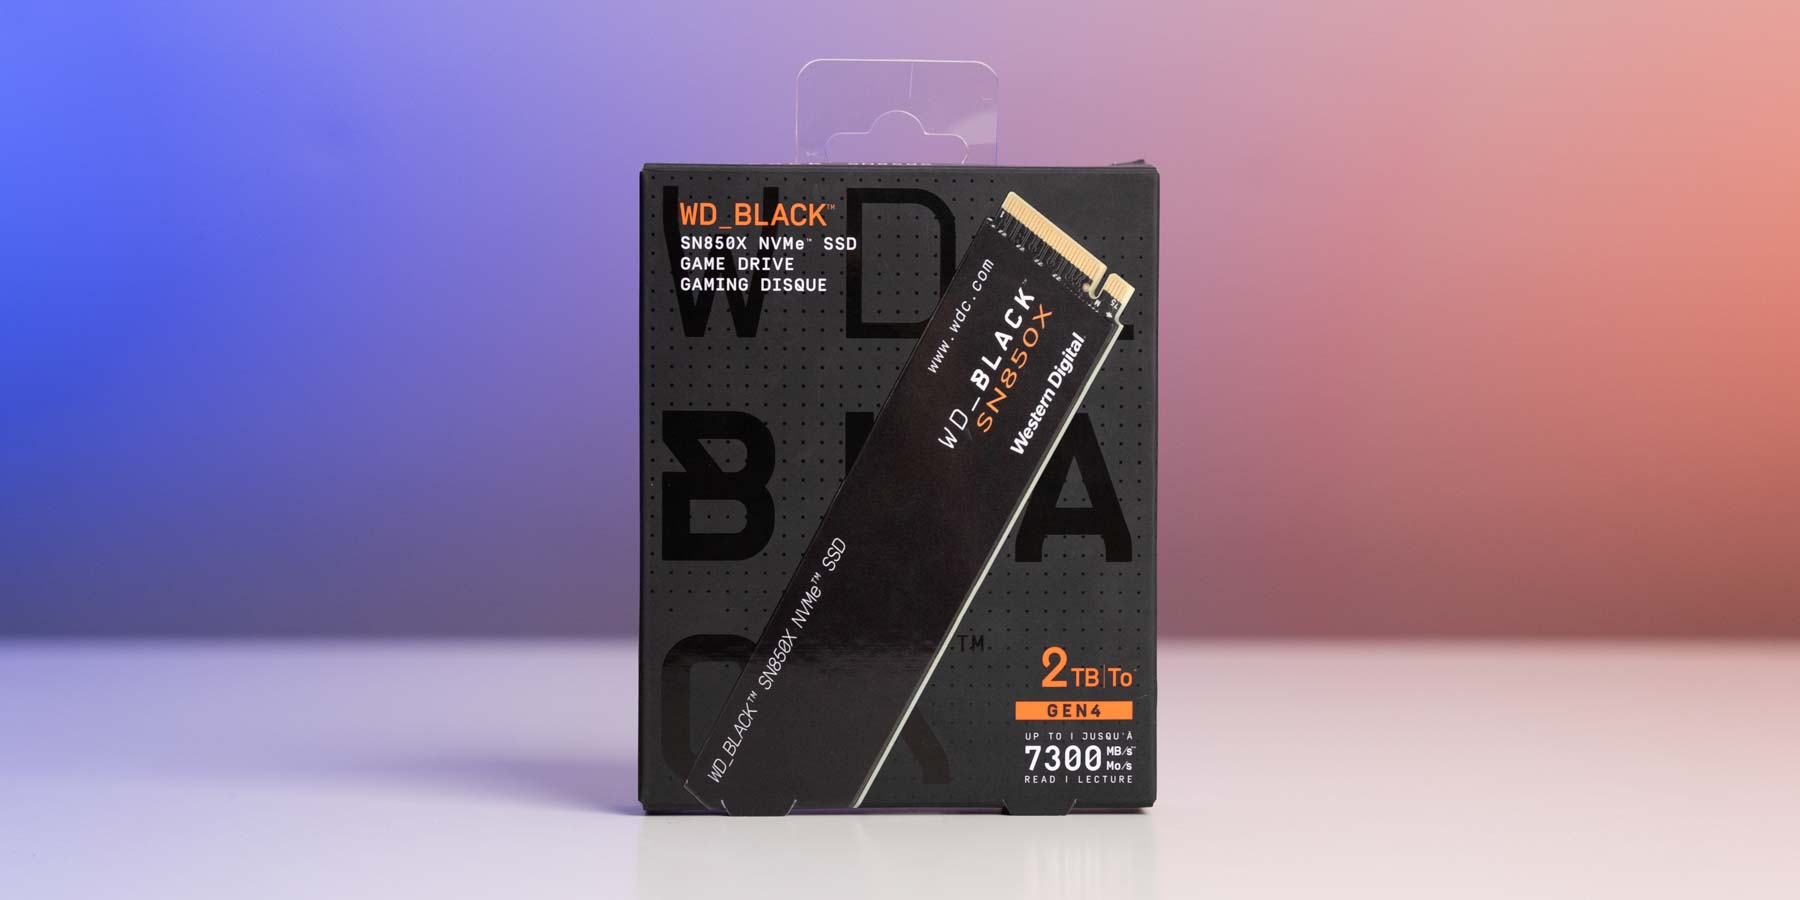 WD_BLACK 2022 model 7,300MB/s SN850X 1TB Gen4 internal SSD drops 